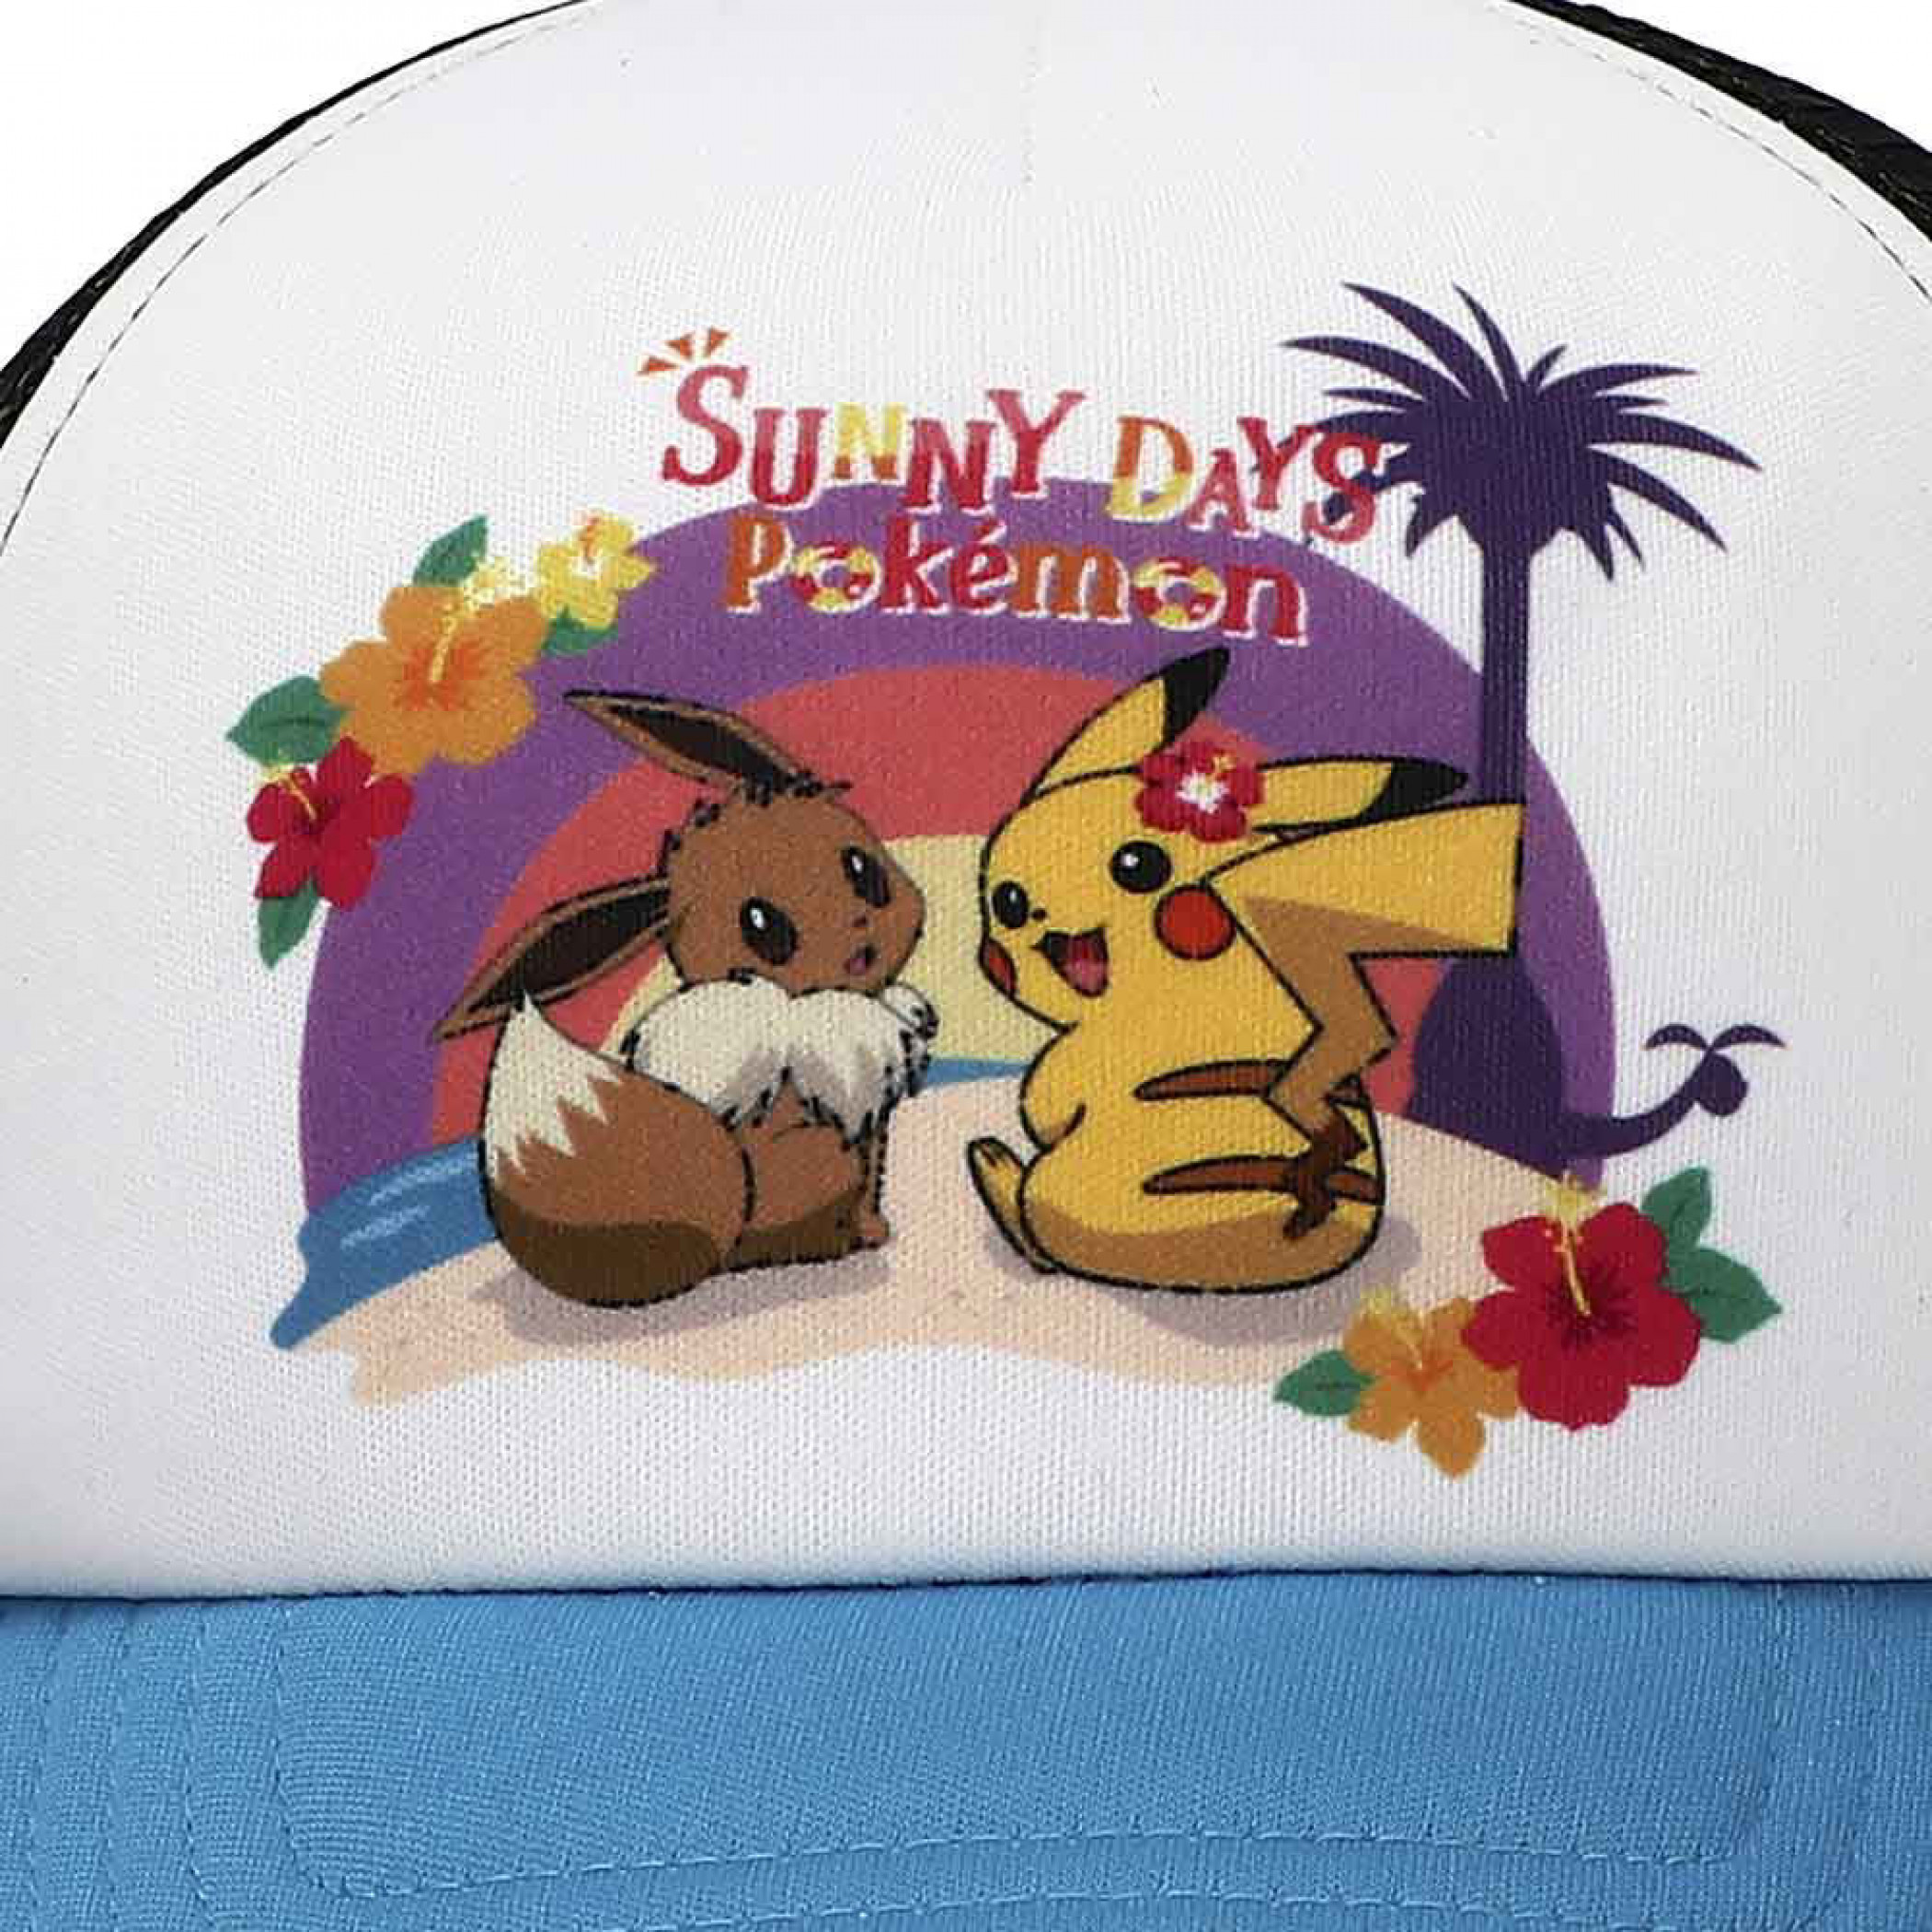 Pokemon Pikachu & Eevee Sunny Days Trucker Hat